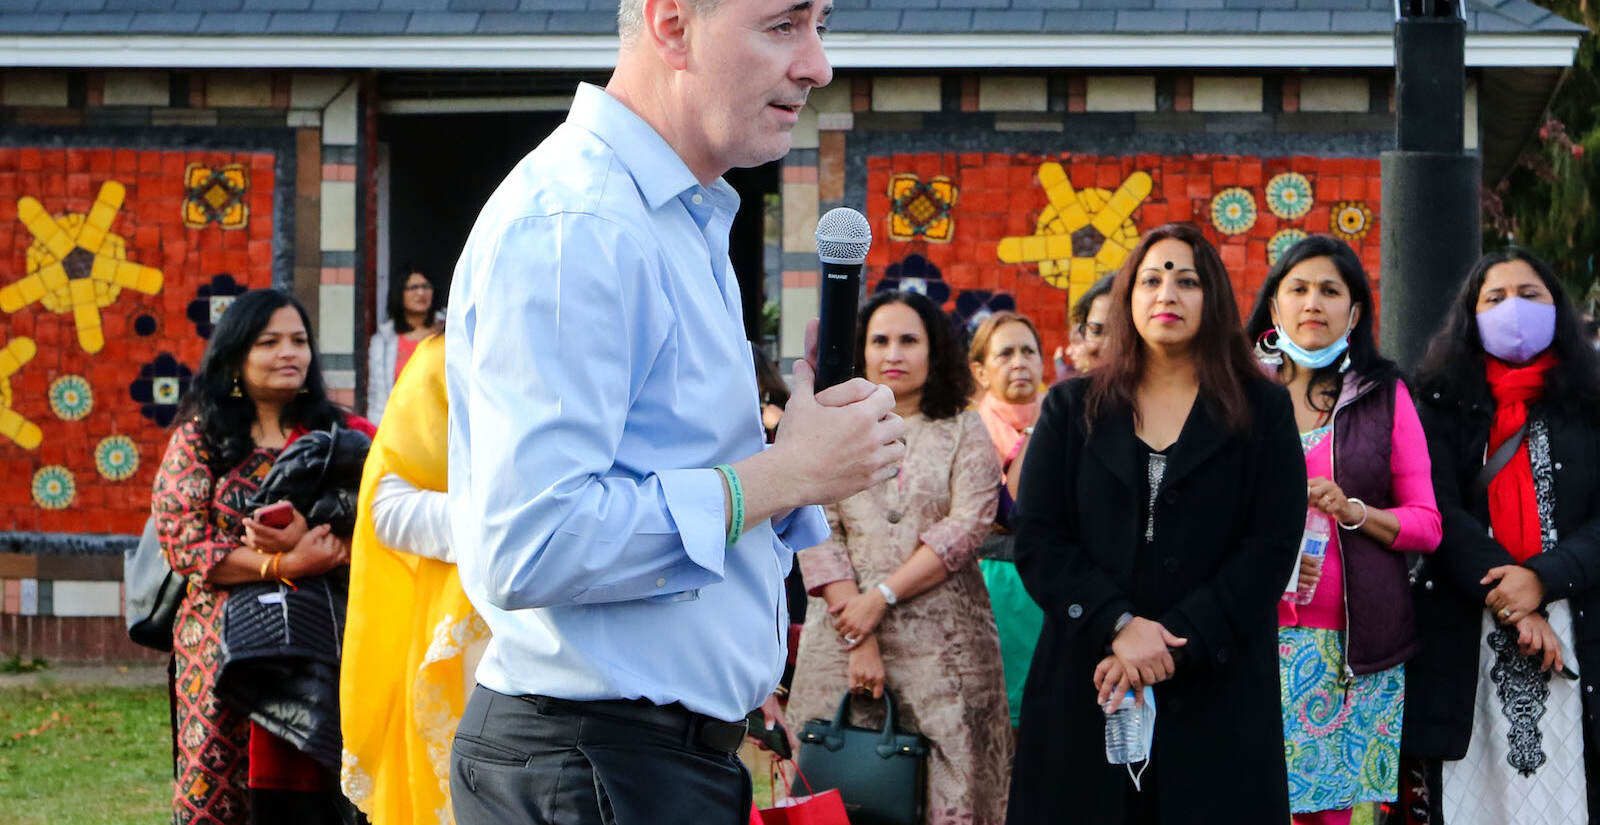 Rep. Brian Fitzpatrick attends the first annual Diwali festival